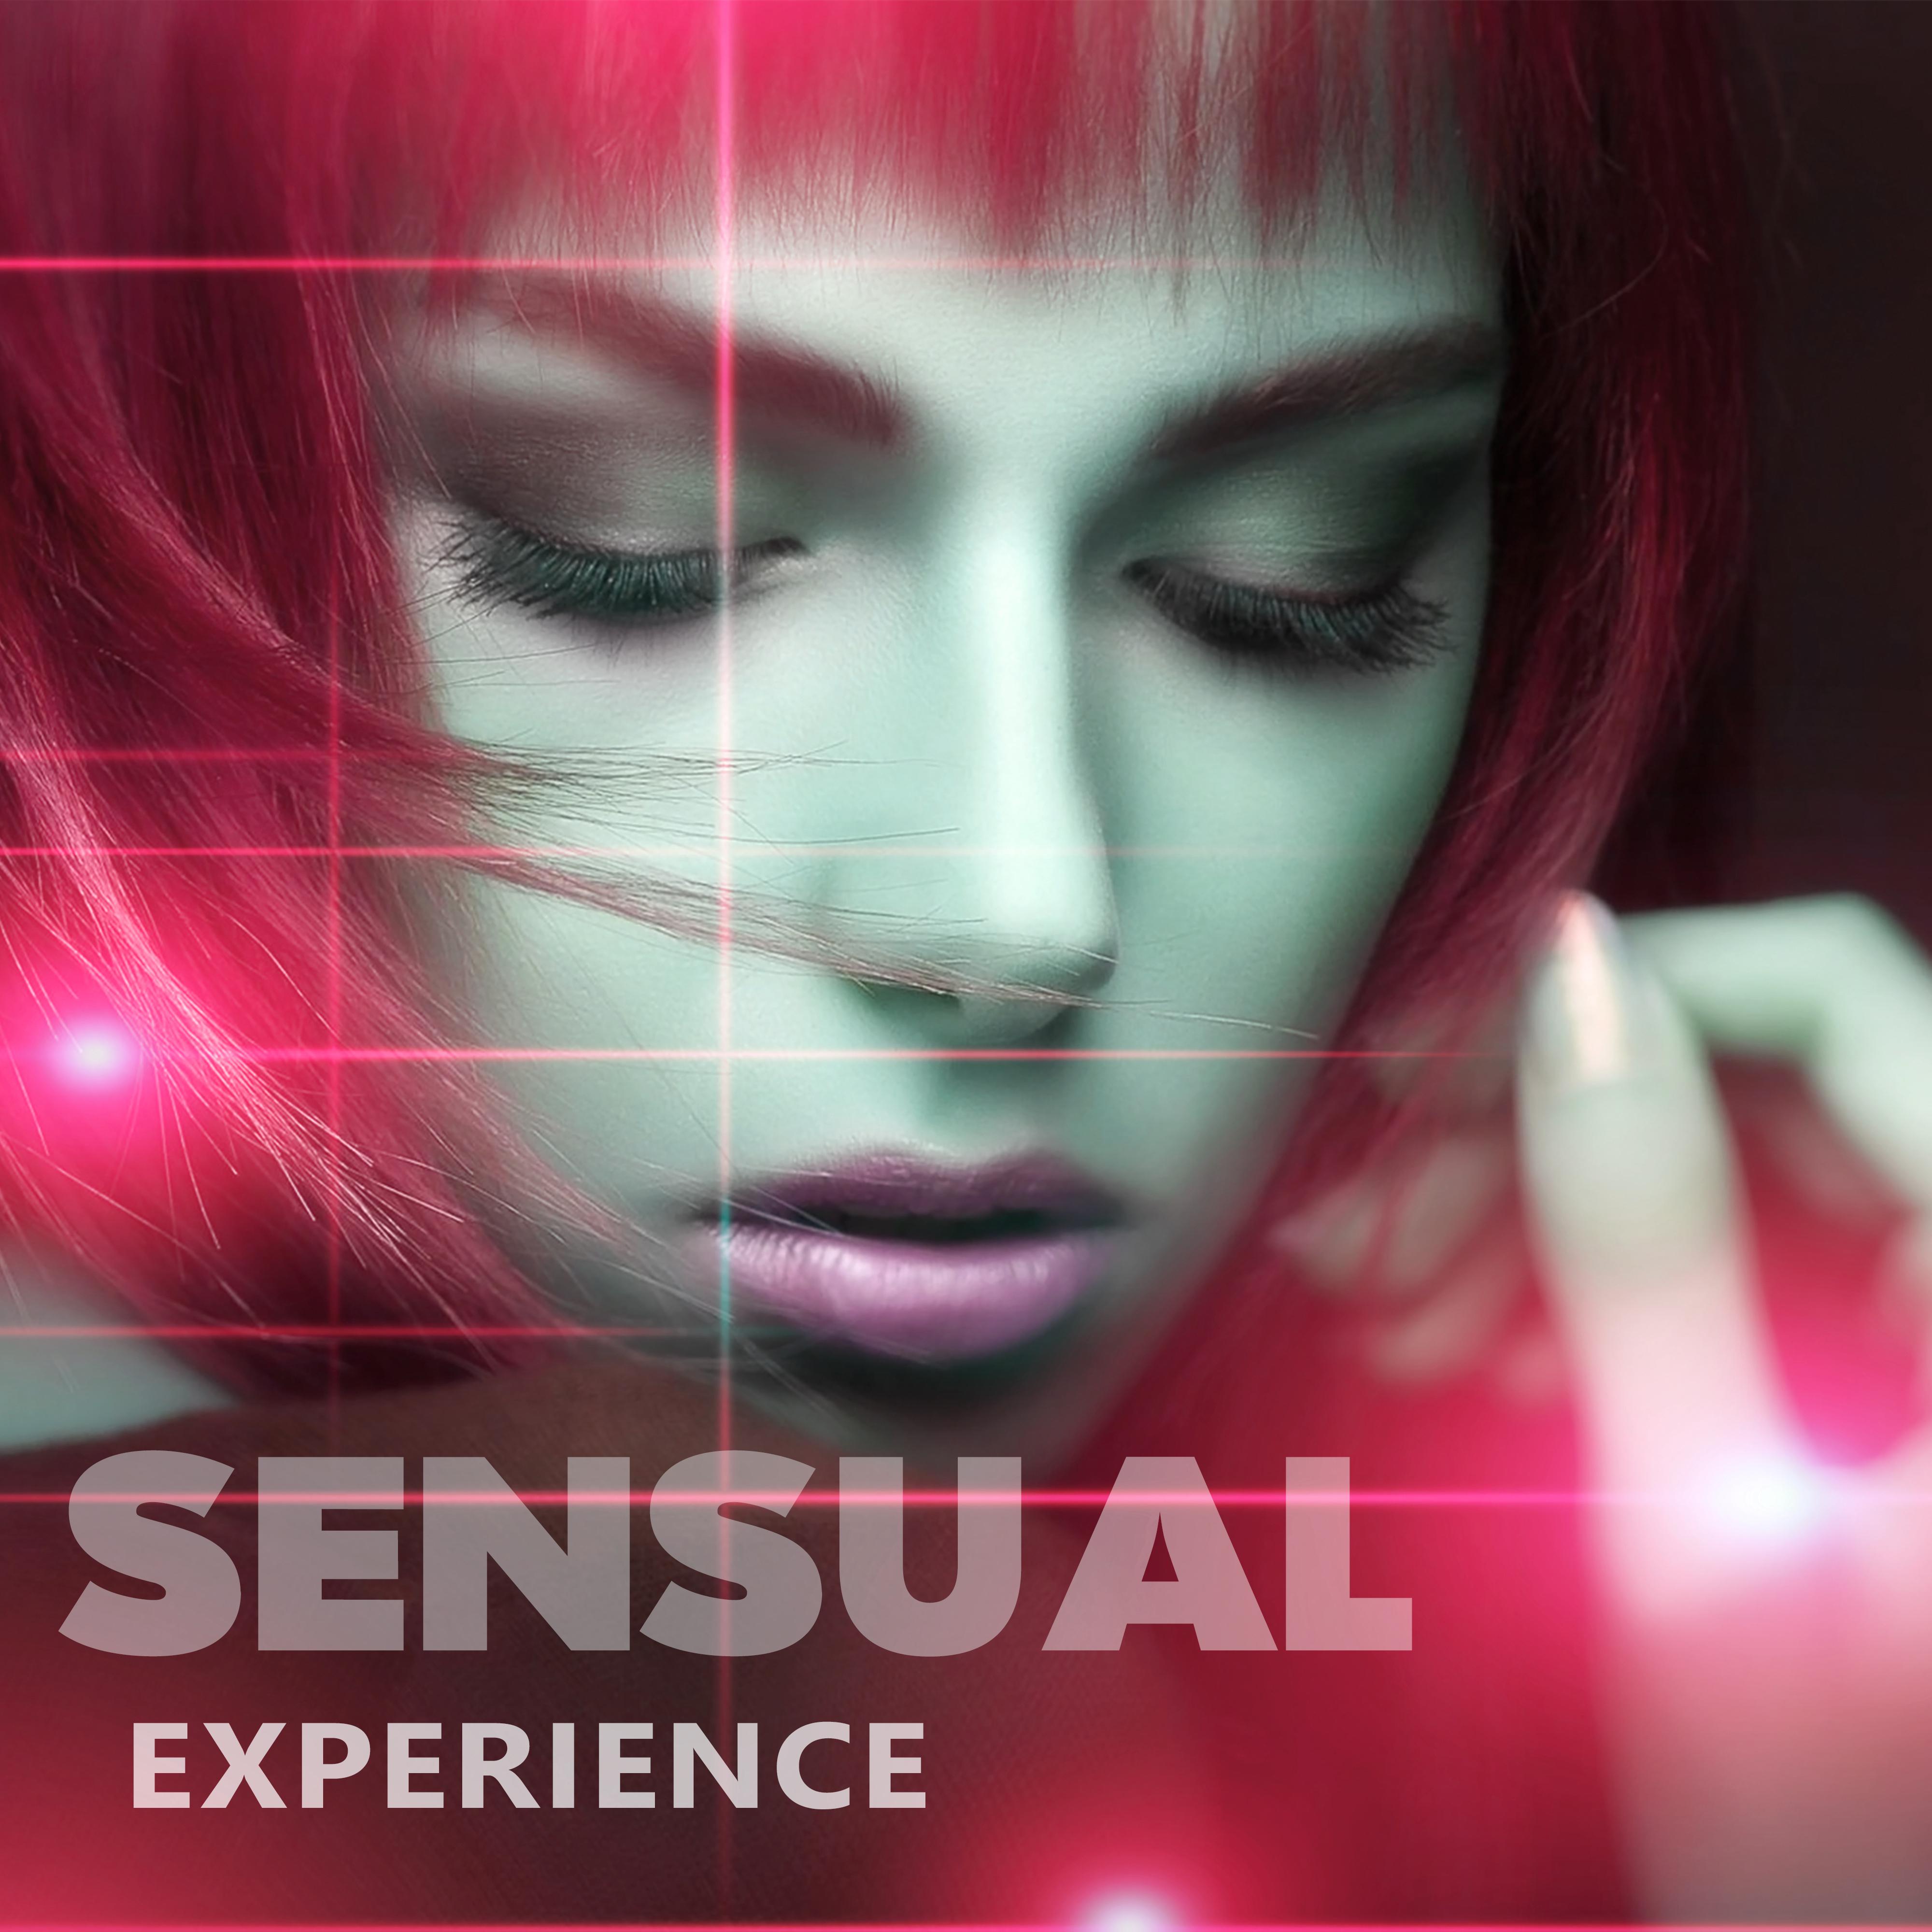 Sensual Experience - Miraculous Power of Jazz, Sound Wonder, Curiosity Melody, Interest Music